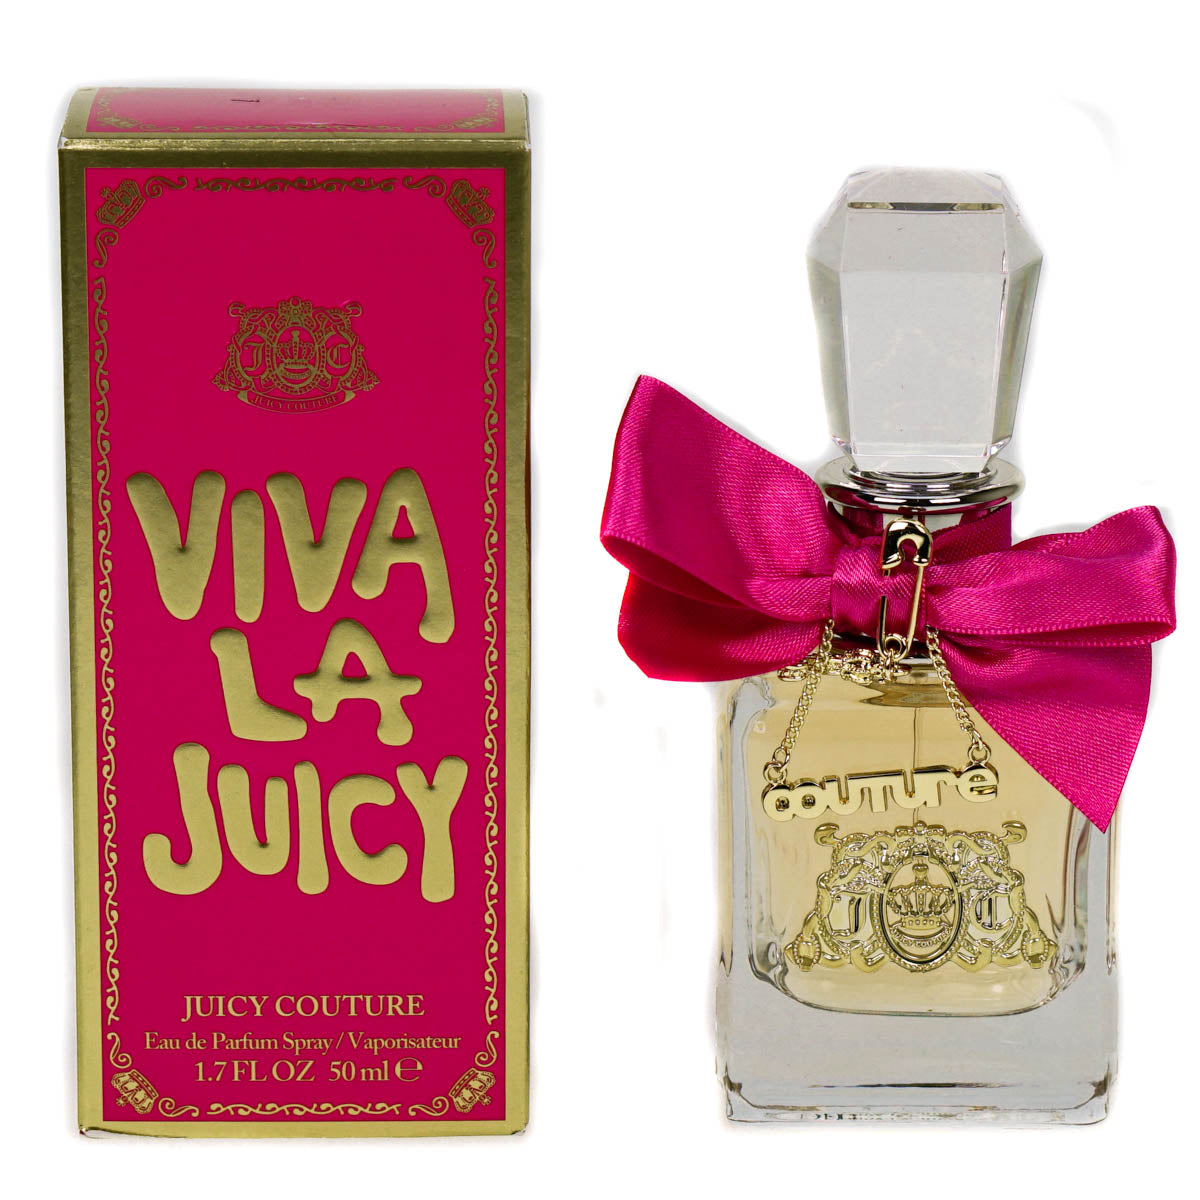 Juicy Couture Viva La Juicy 50ml Eau De Parfum